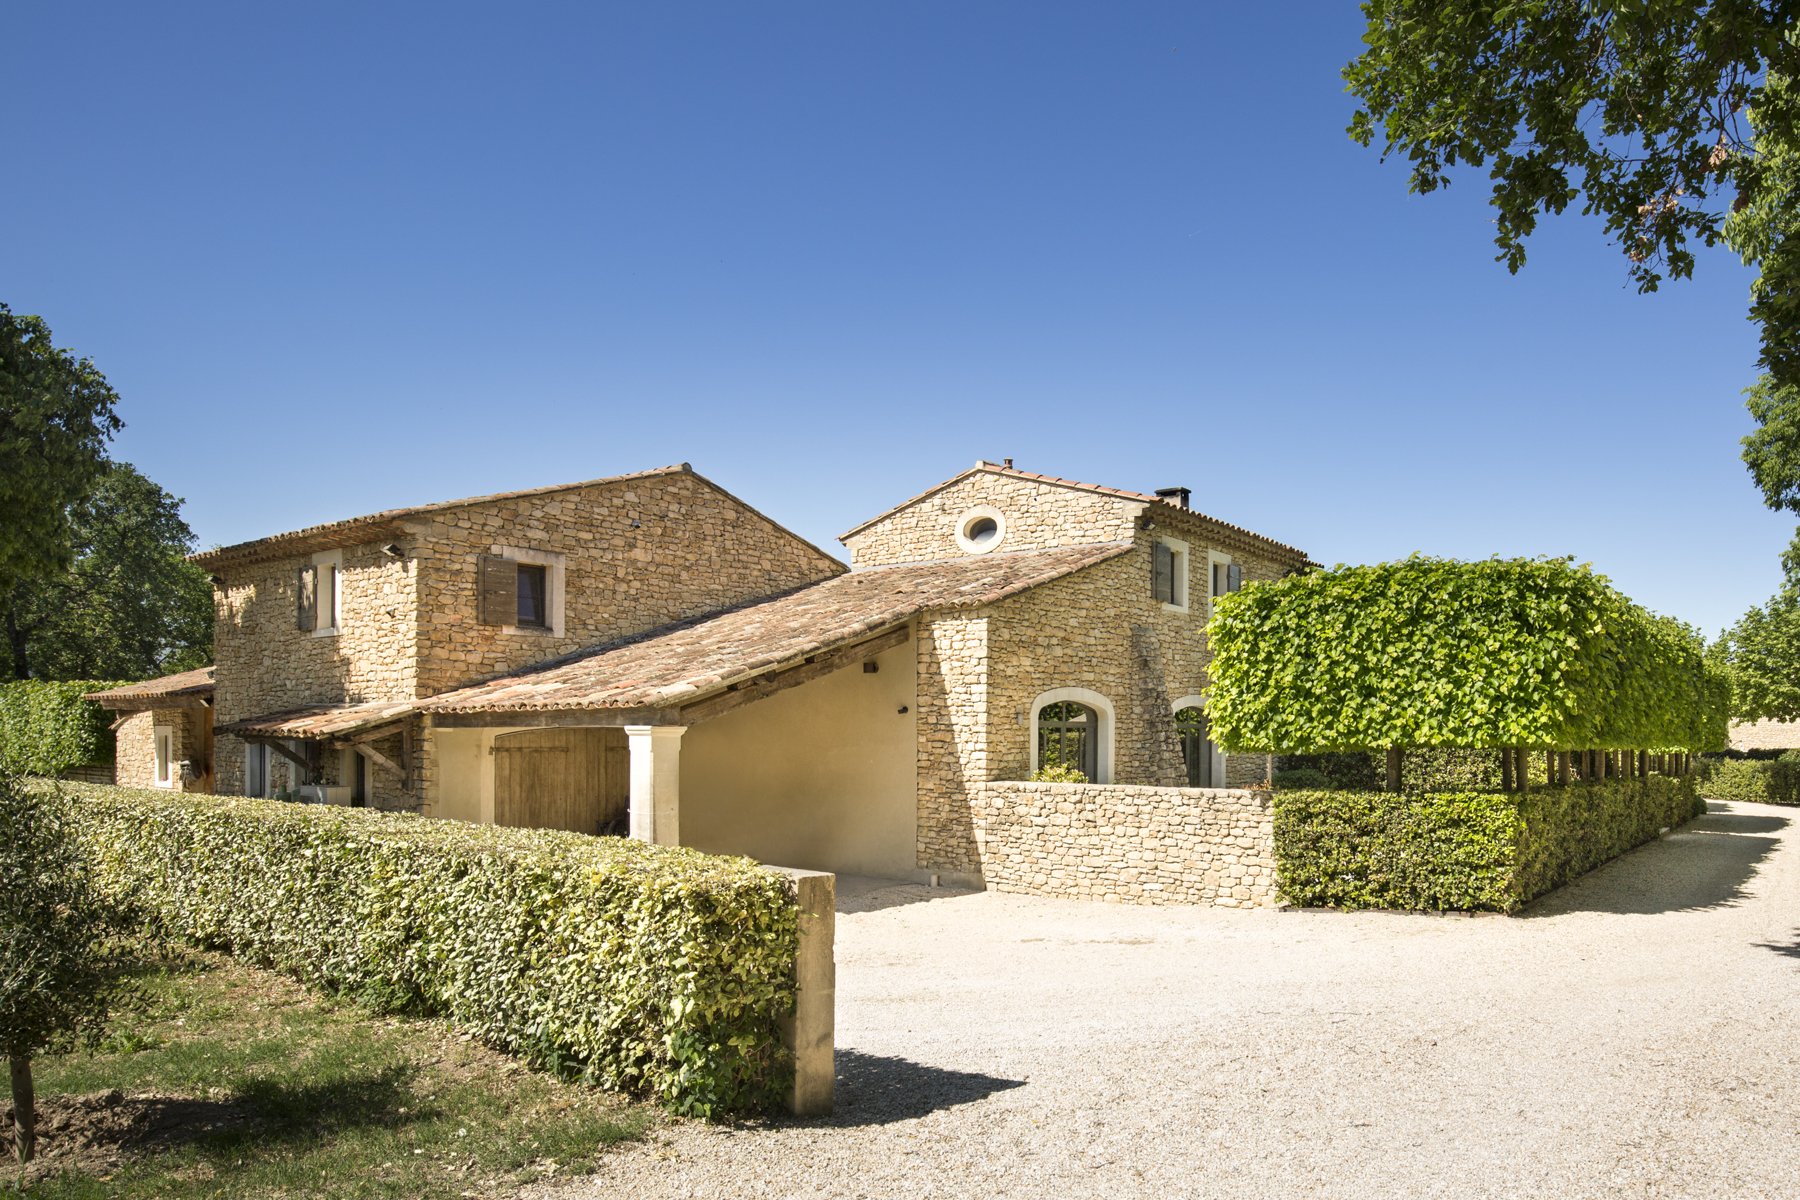 Francis York Luxury Villa and Turnkey Property in Gordes, Provence 16.jpg